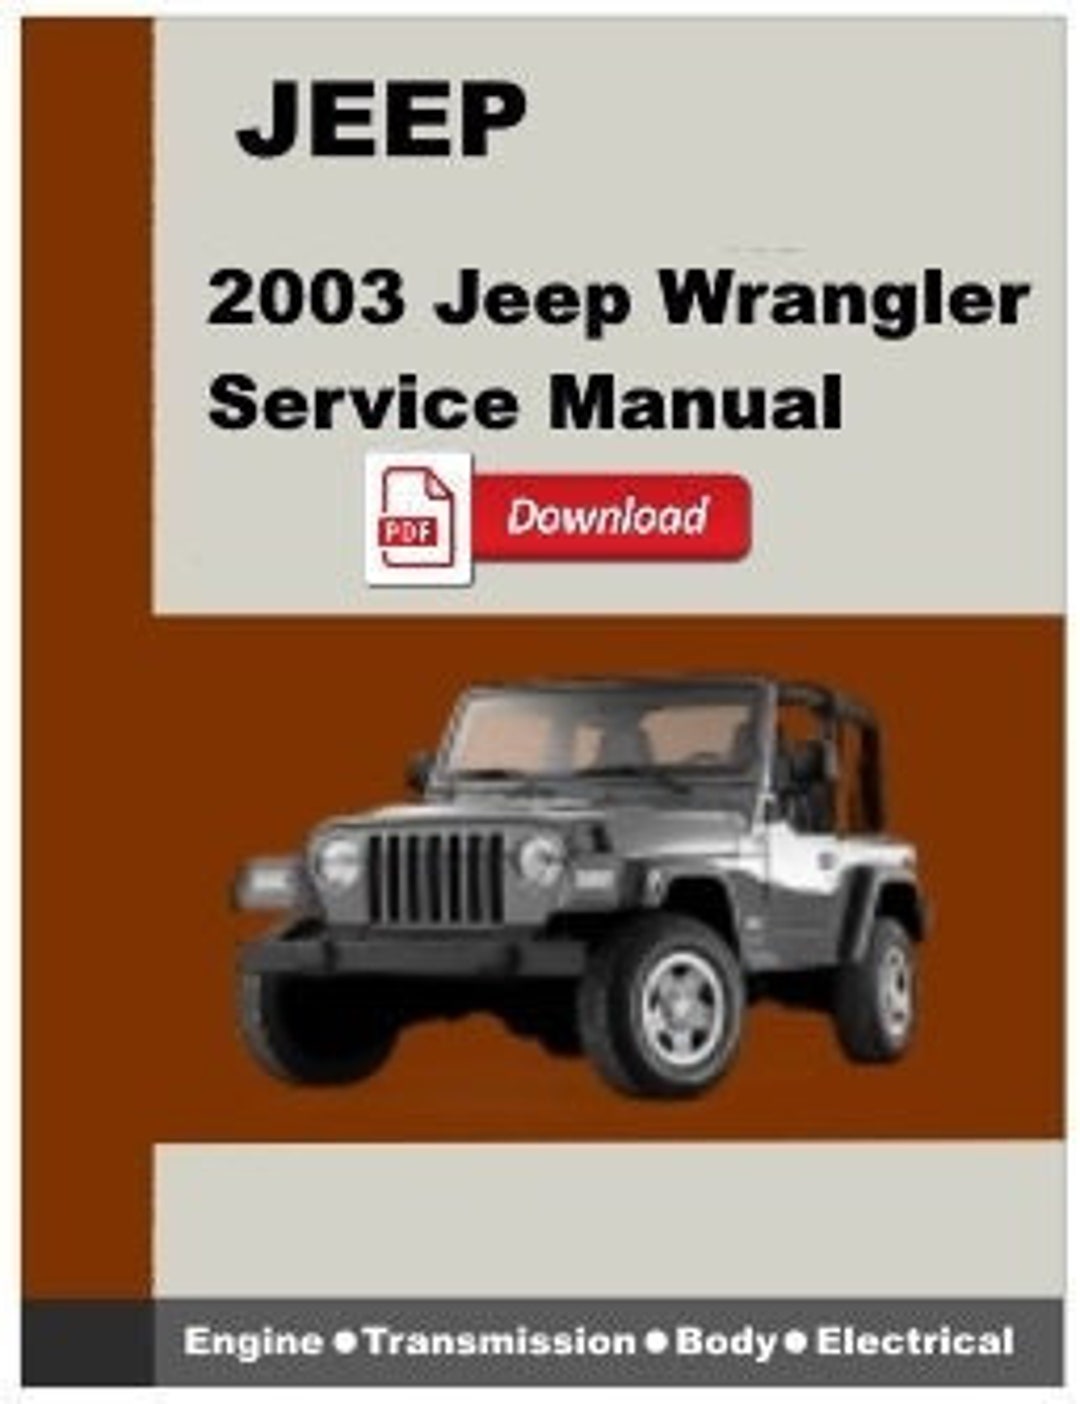 2003 Jeep Wrangler Service Manual-pdf Download - Etsy